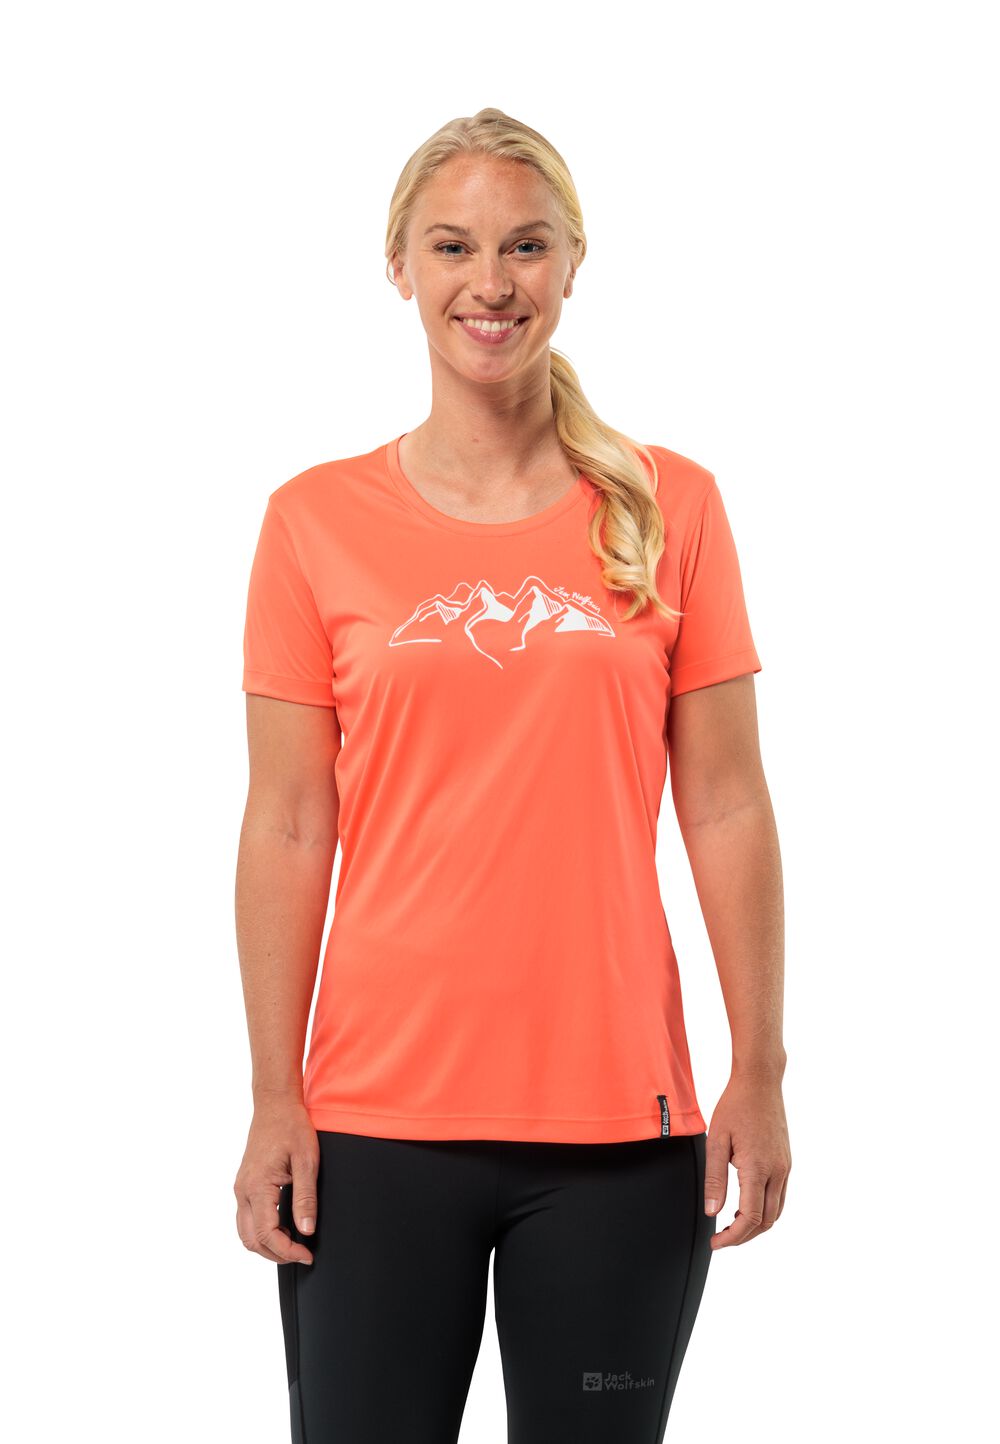 Jack Wolfskin Peak Graphic T-Shirt Women Functioneel shirt Dames XL rood digital orange